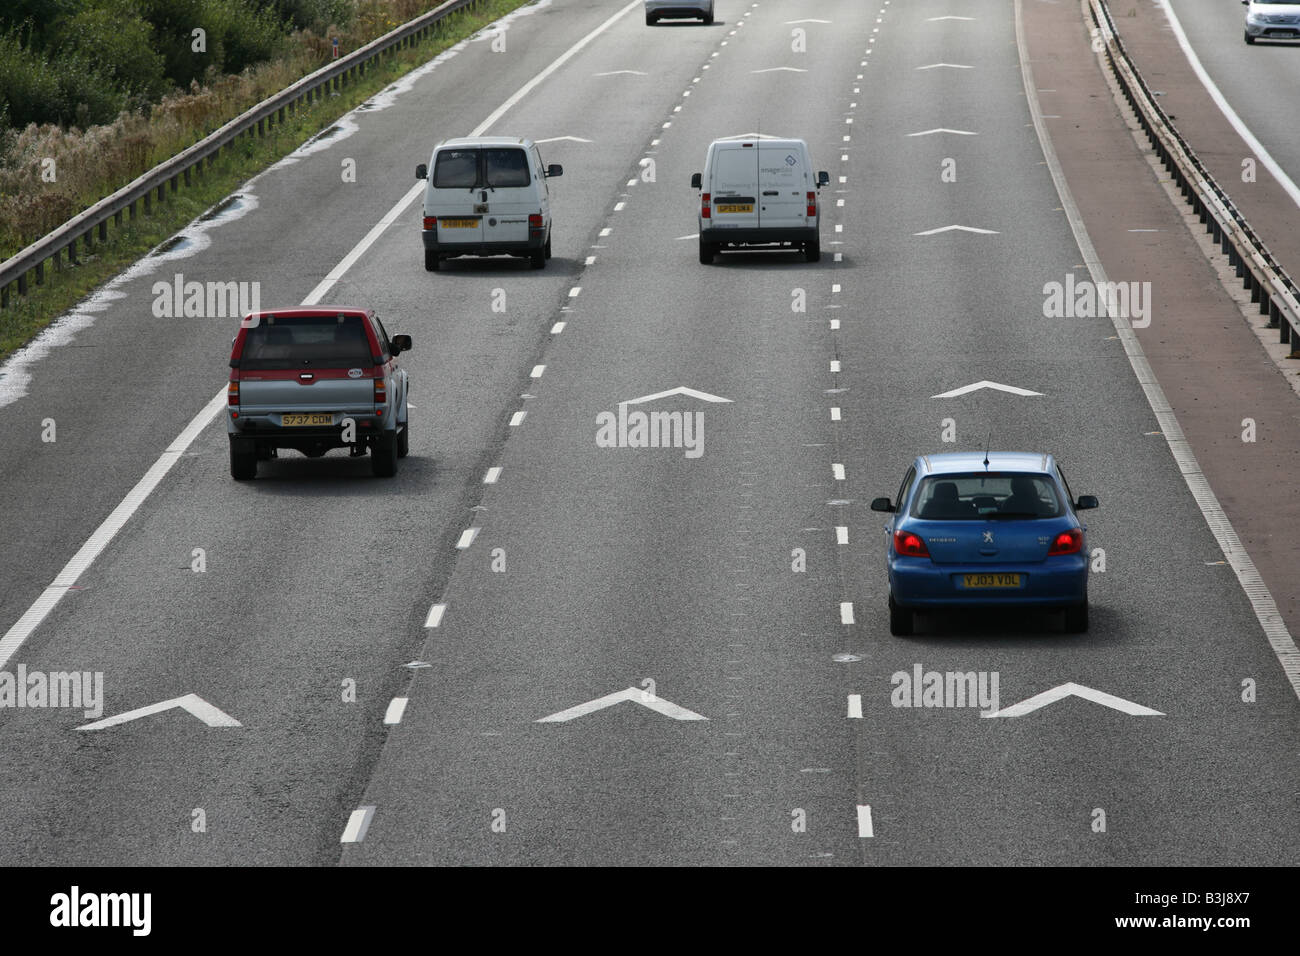 Keep apart 2 chevrons motorway road markings and traffic on M56, Cheshire,UK Stock Photo